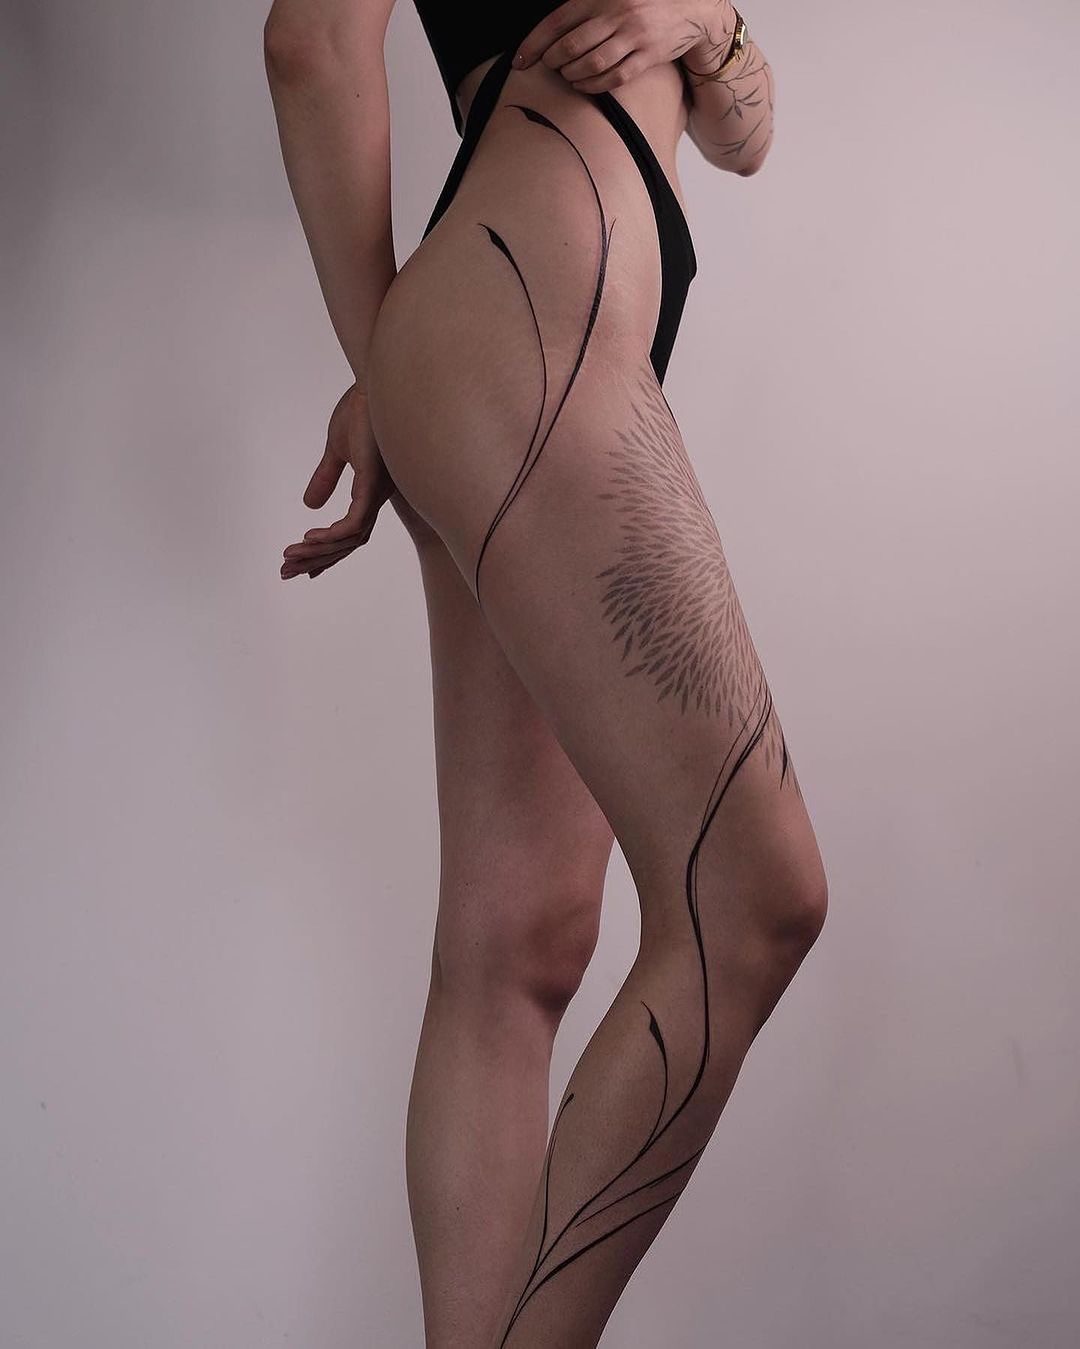 Abstract leg tattoo designs by noiiaberlin